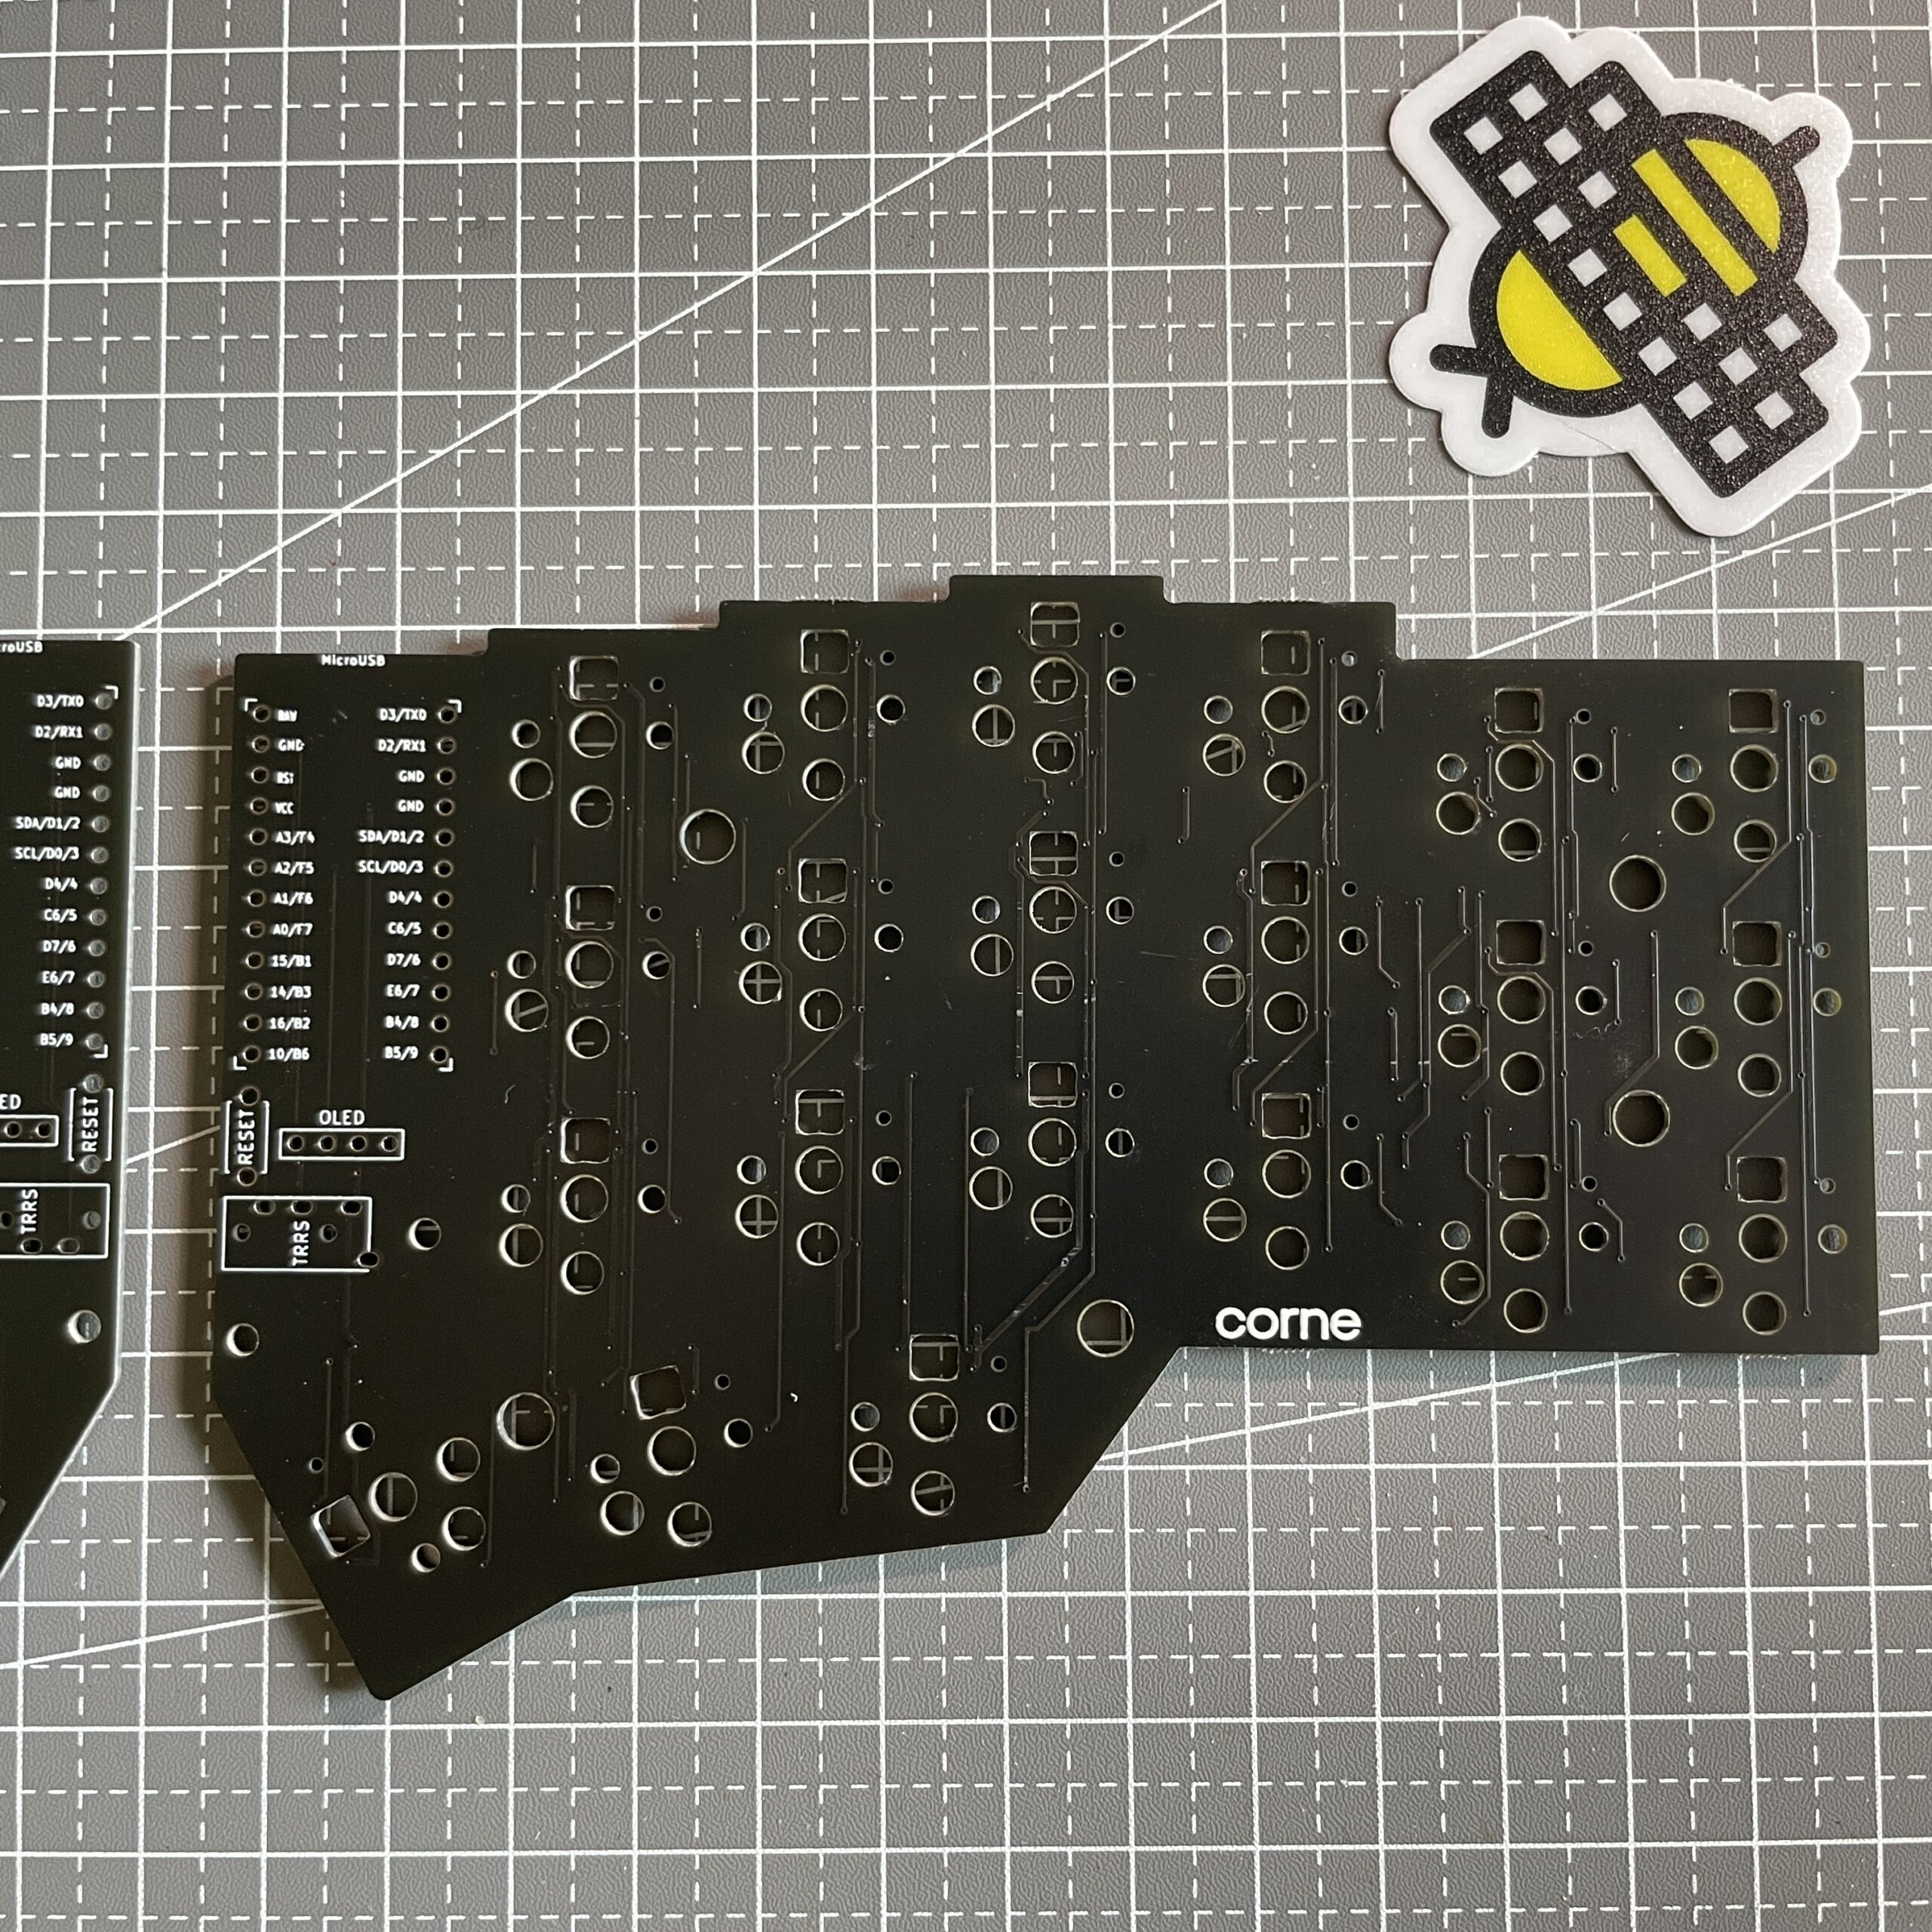 Crkbd v3 (Corne Keyboard) Choc / Chocolate Low Profile LP PCB Kit